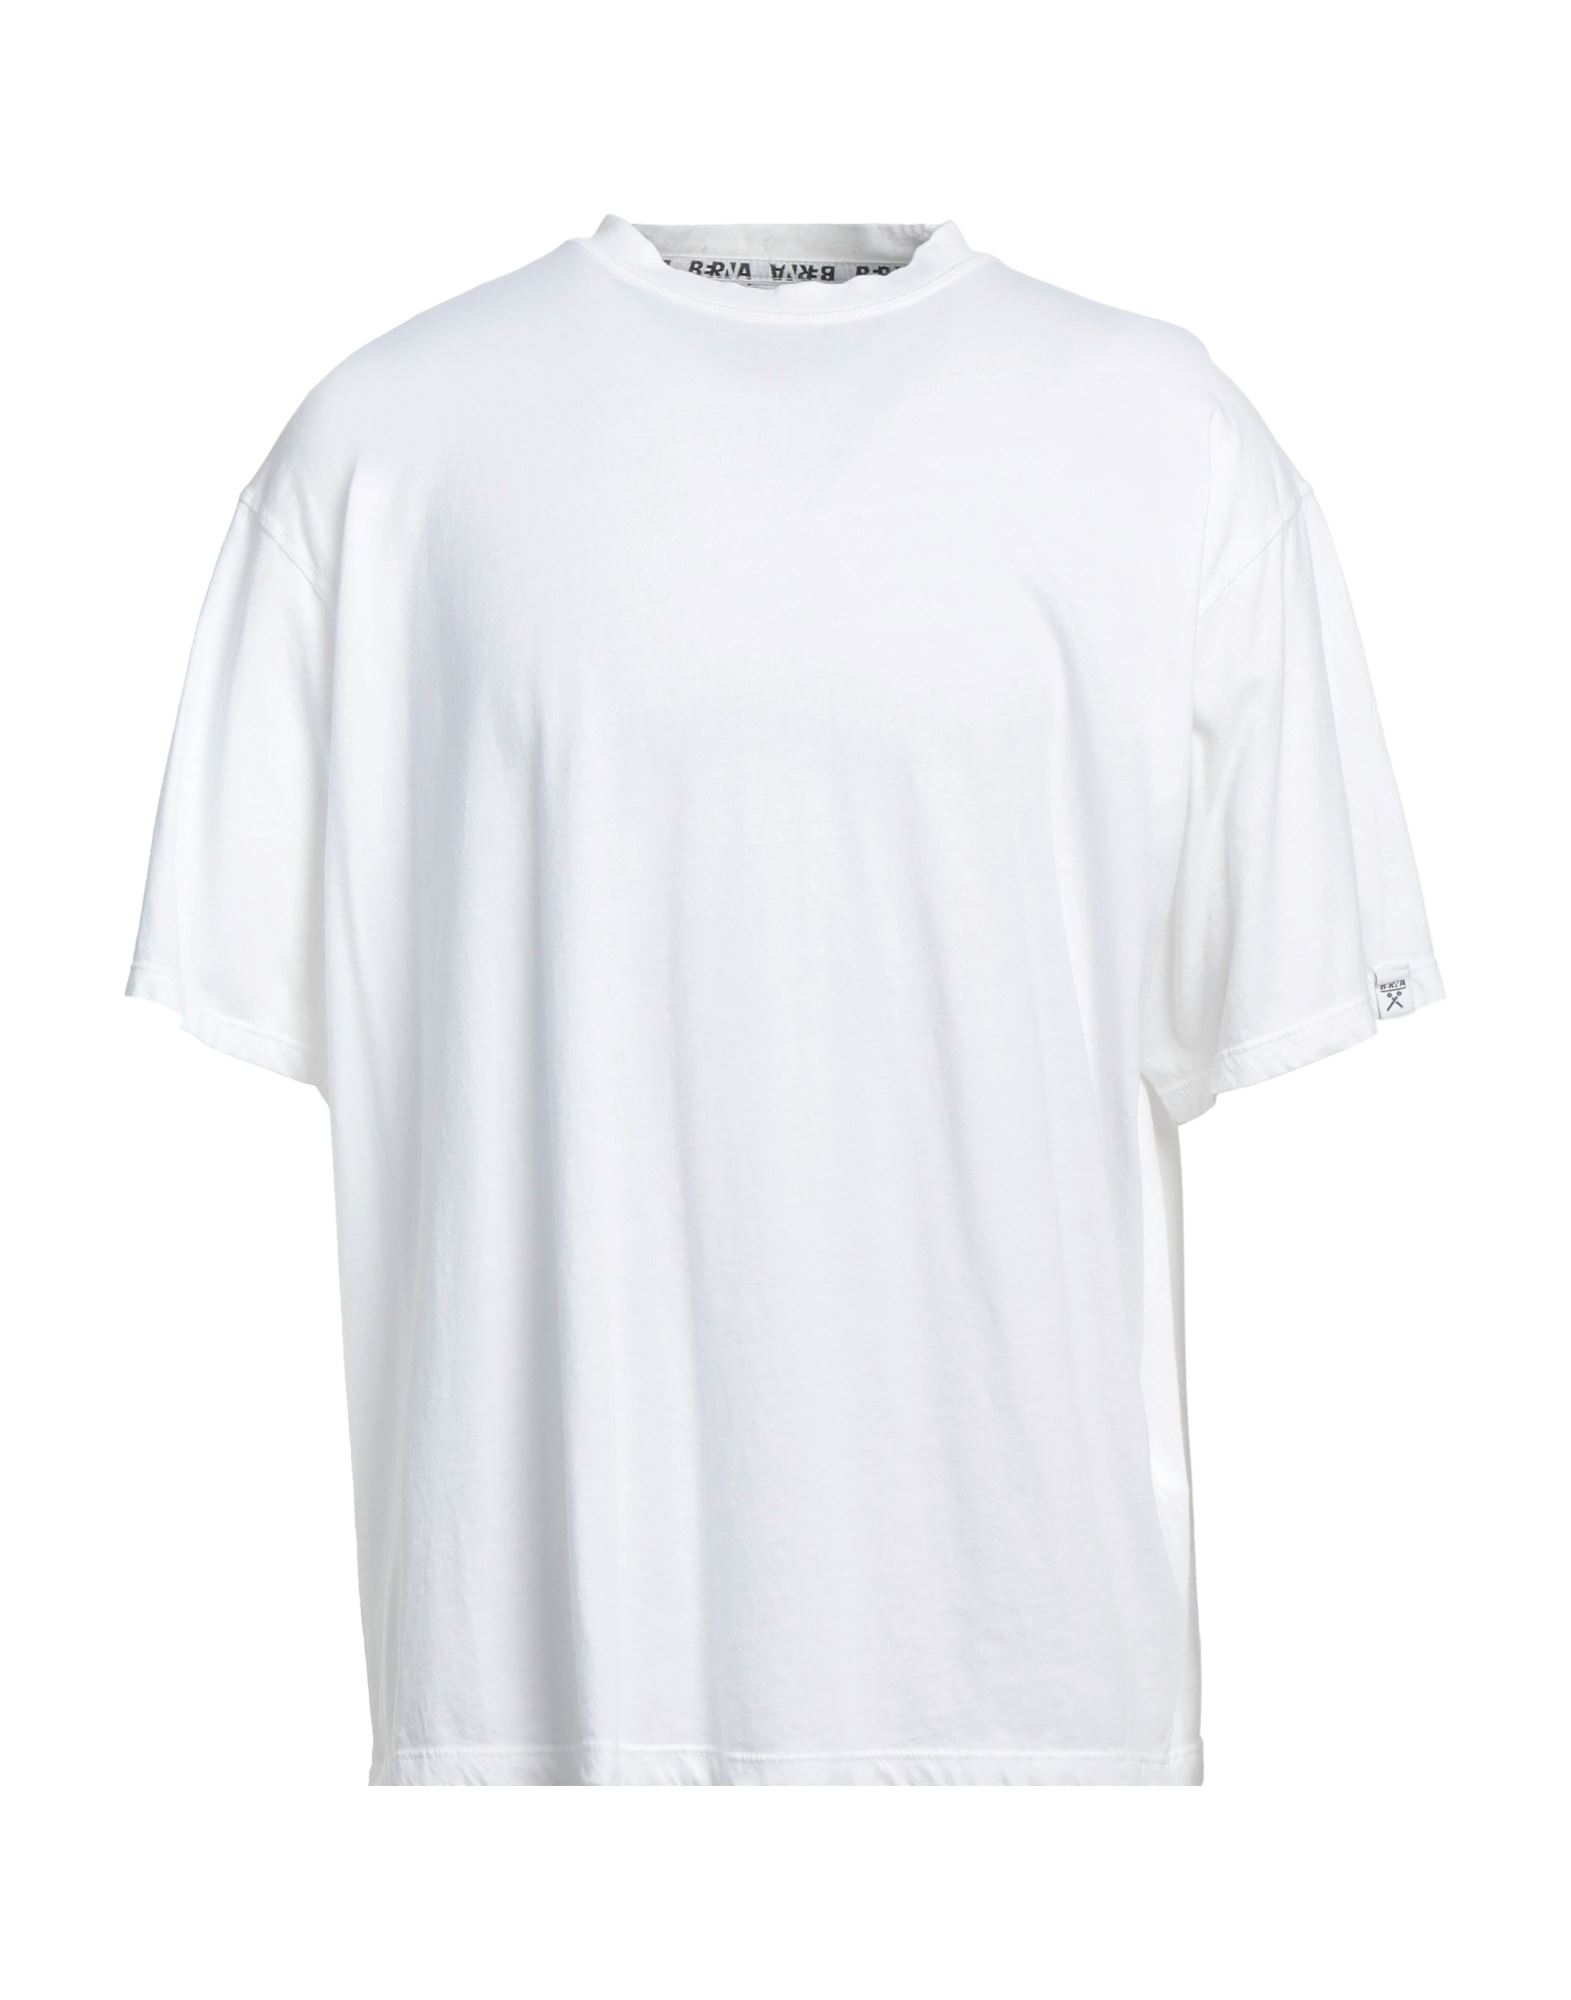 Berna T-shirts In White